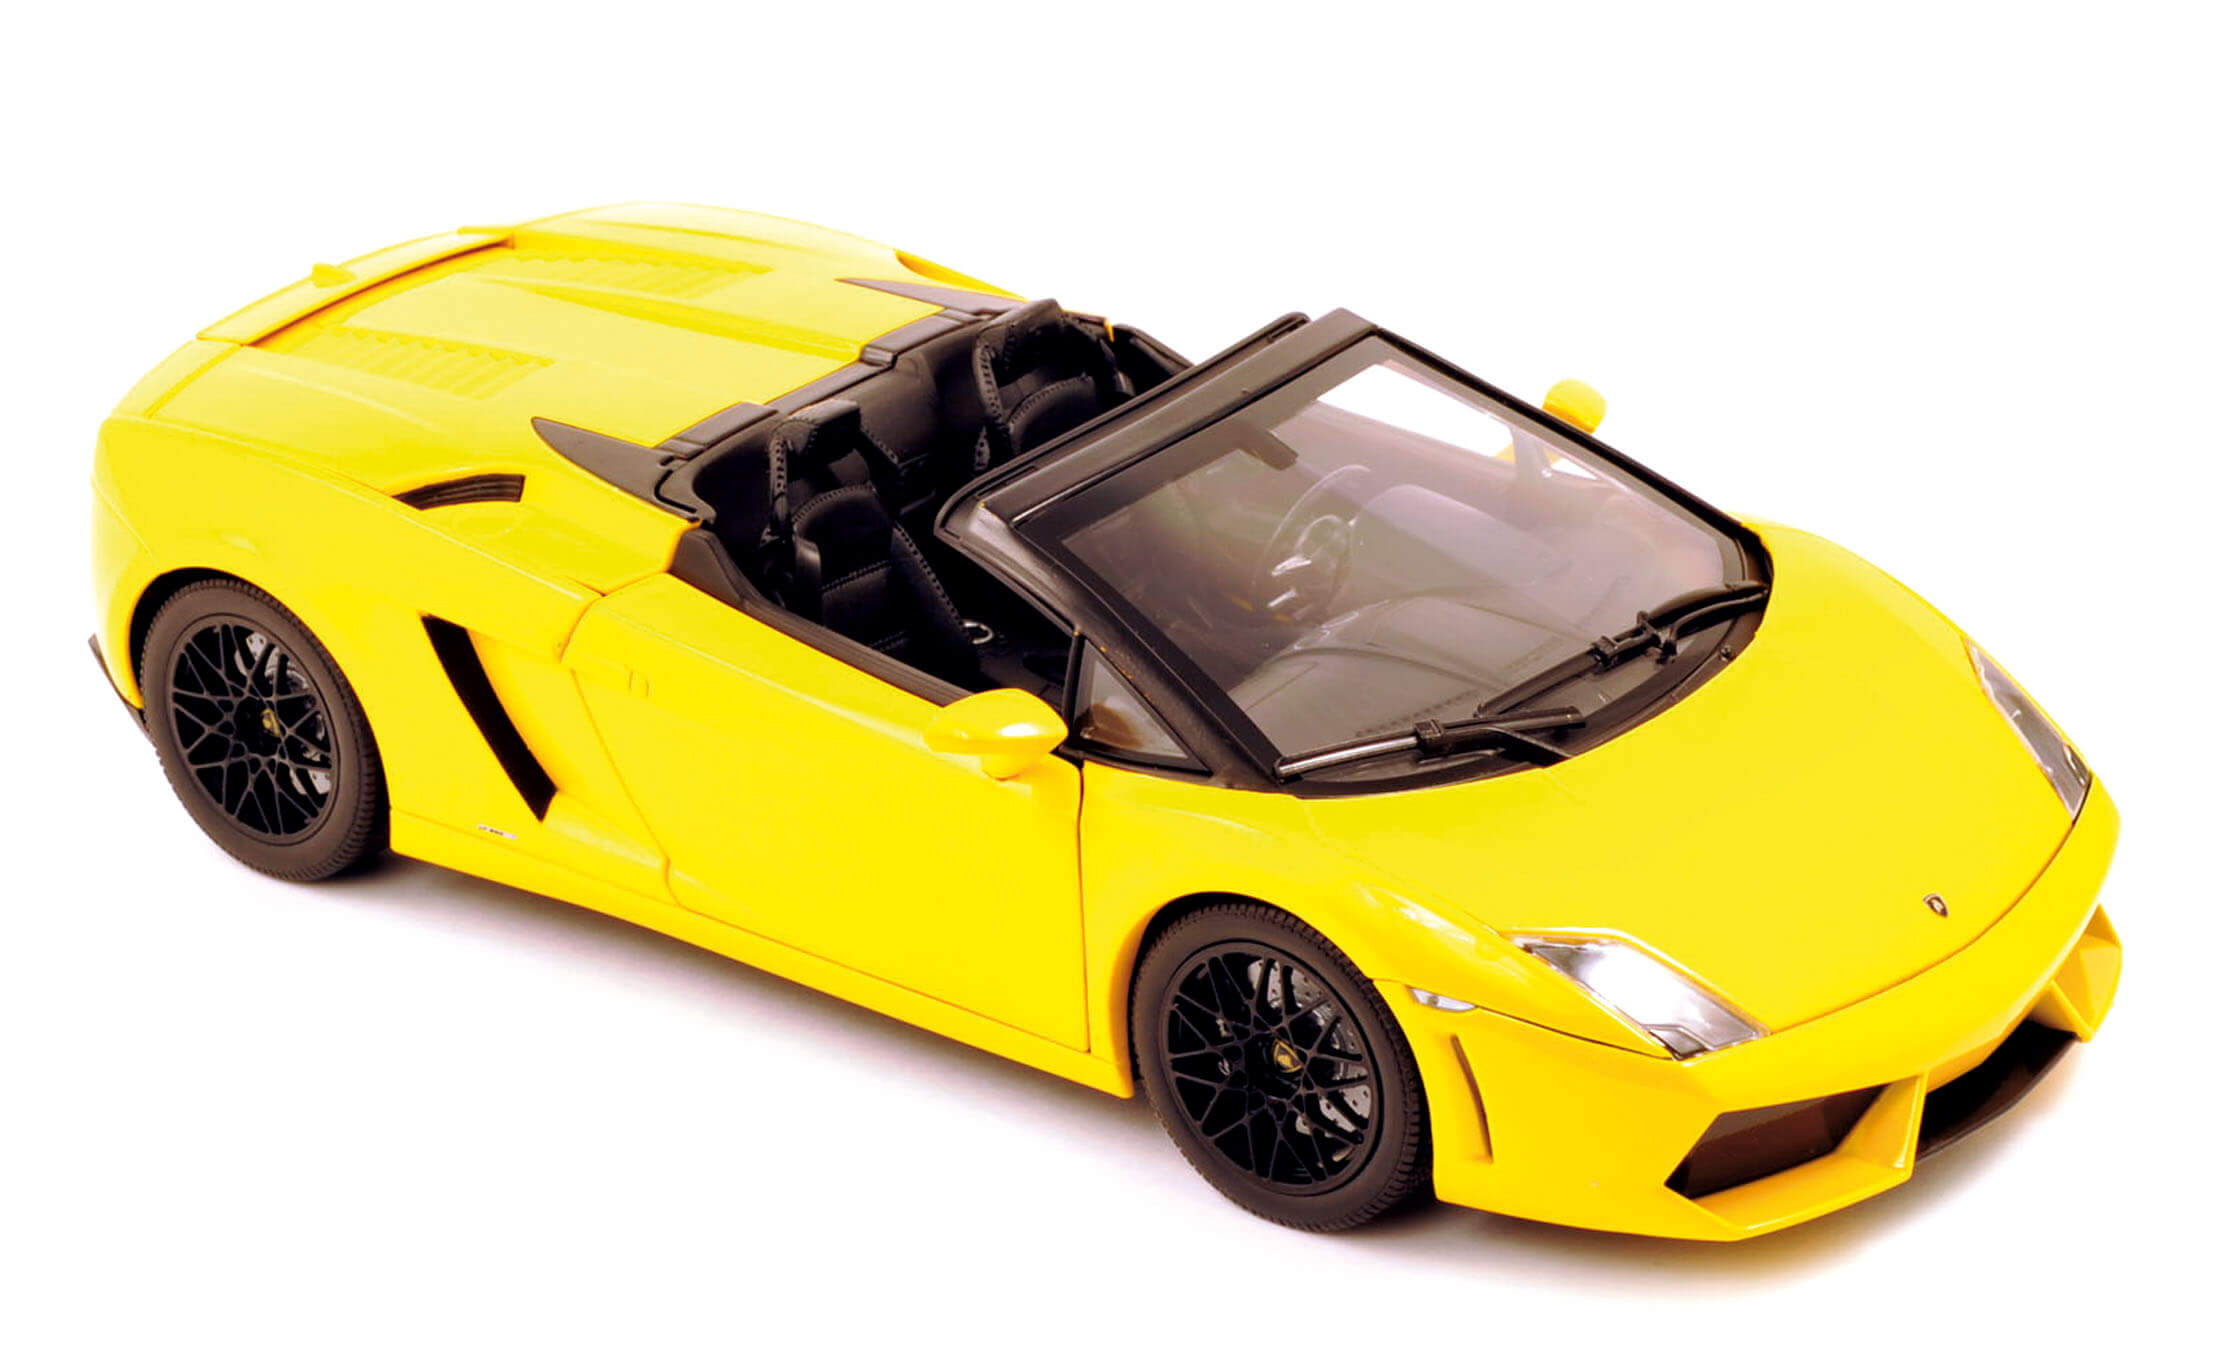 2009 Lamborghini Gallardo Lp 560-4 Spyder Yellow 1/18 Diecast Car Model By Norev